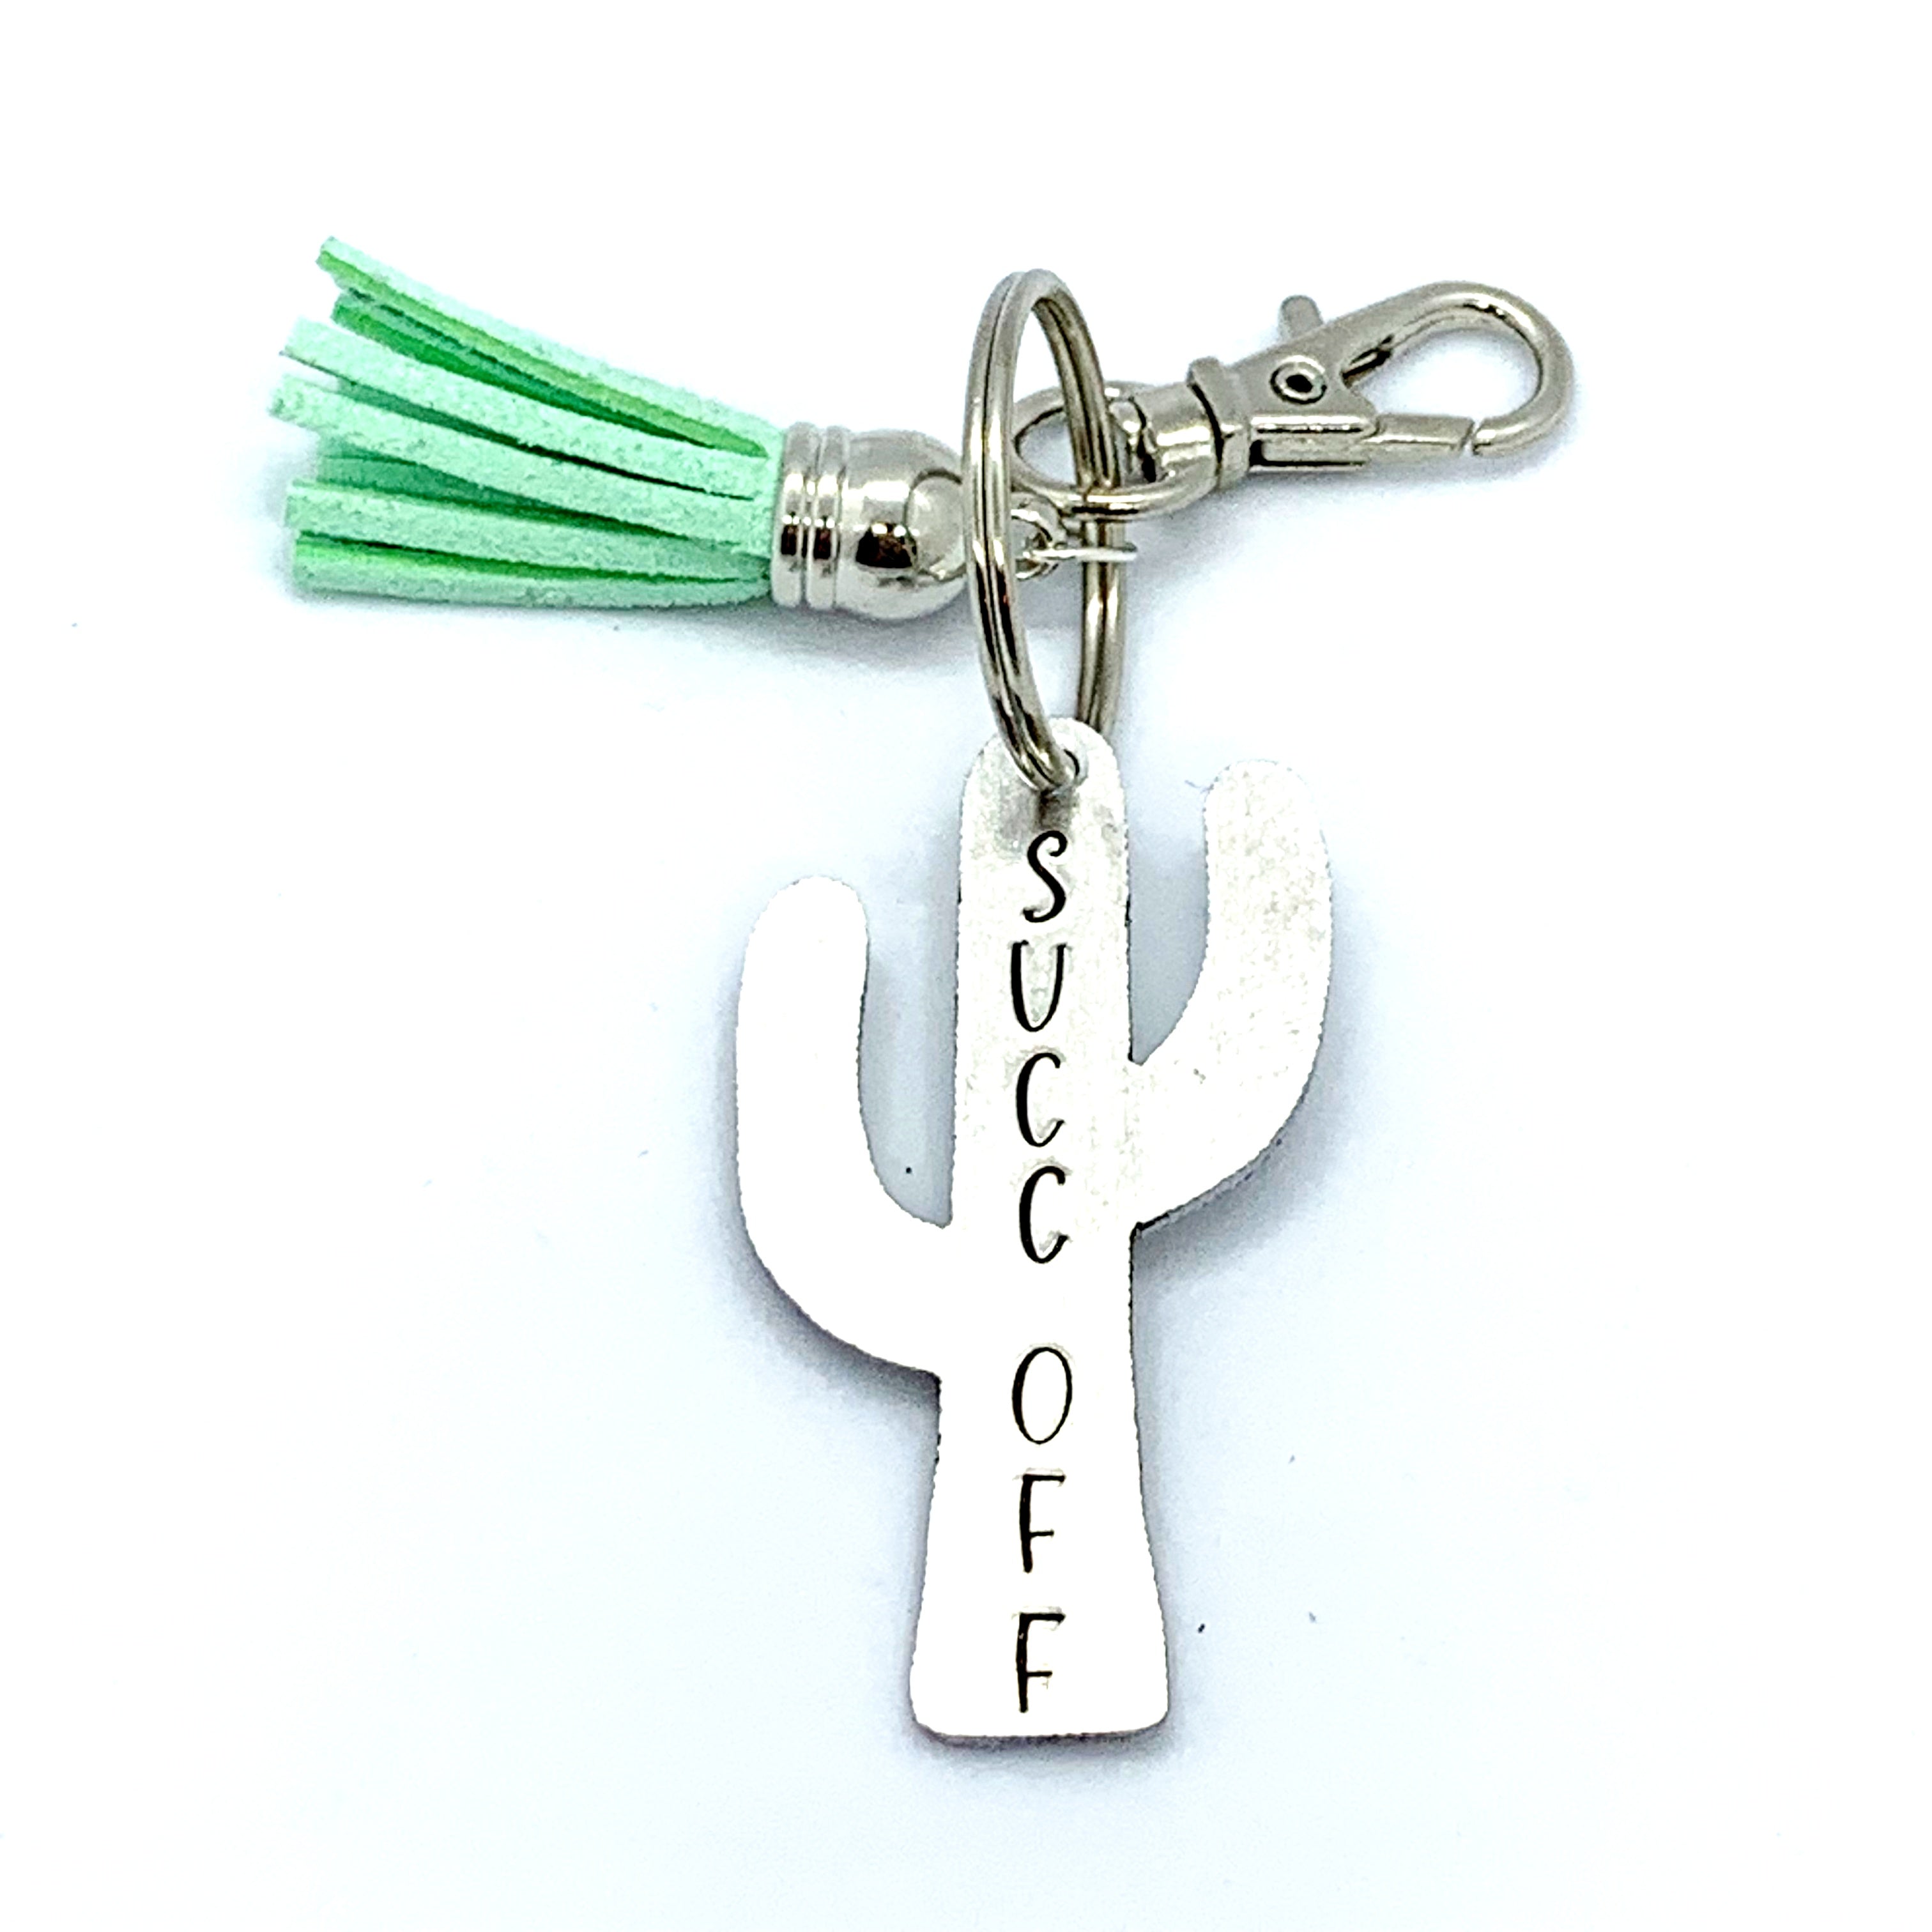 Key Chain - Cactus Shape - Succ Off